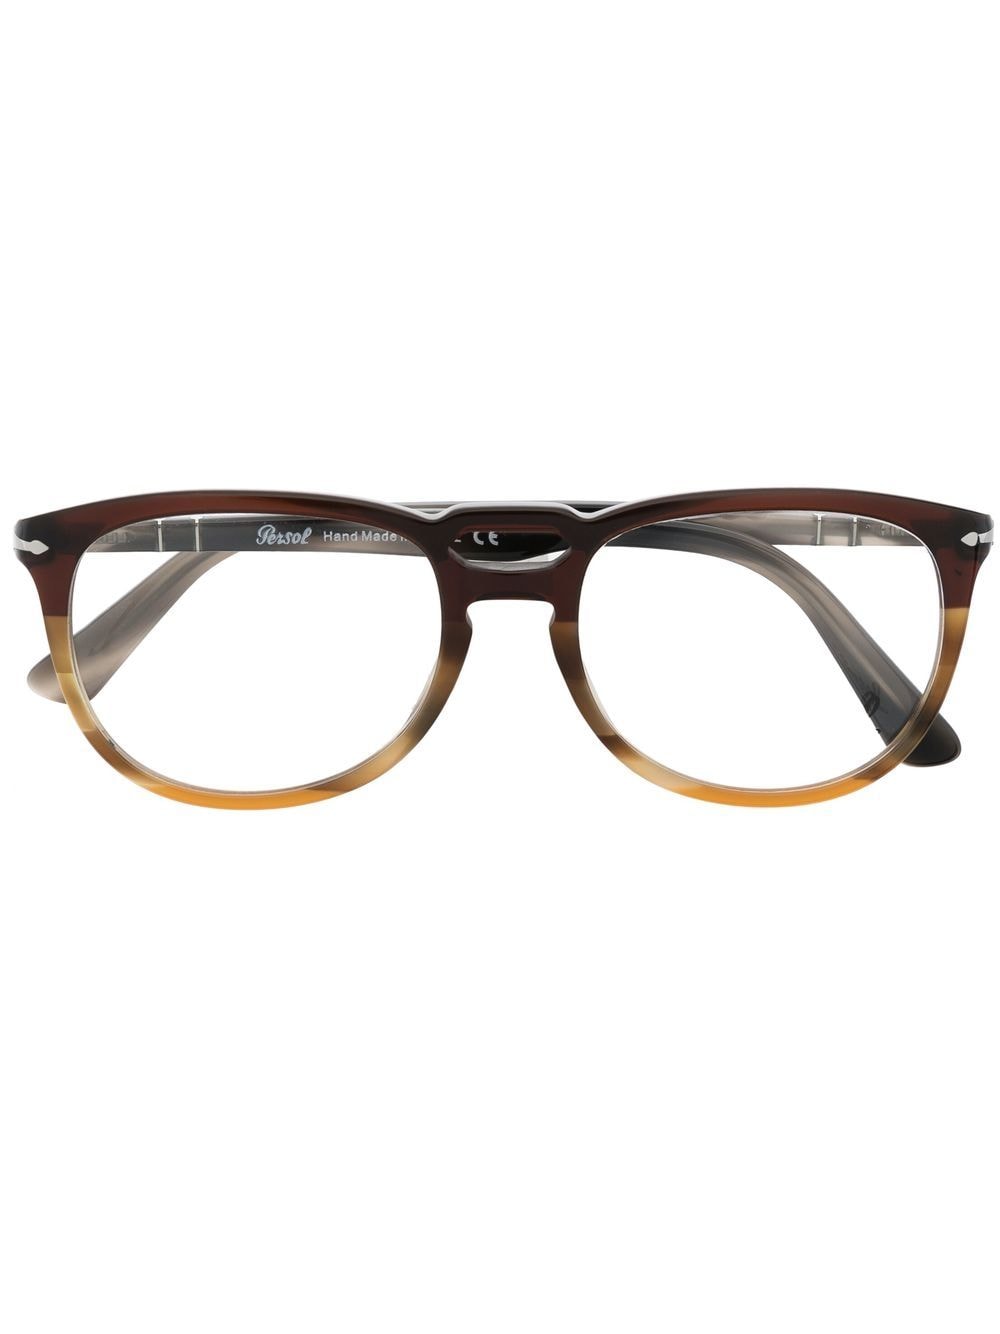 Persol round frame faded glasses - Brown von Persol